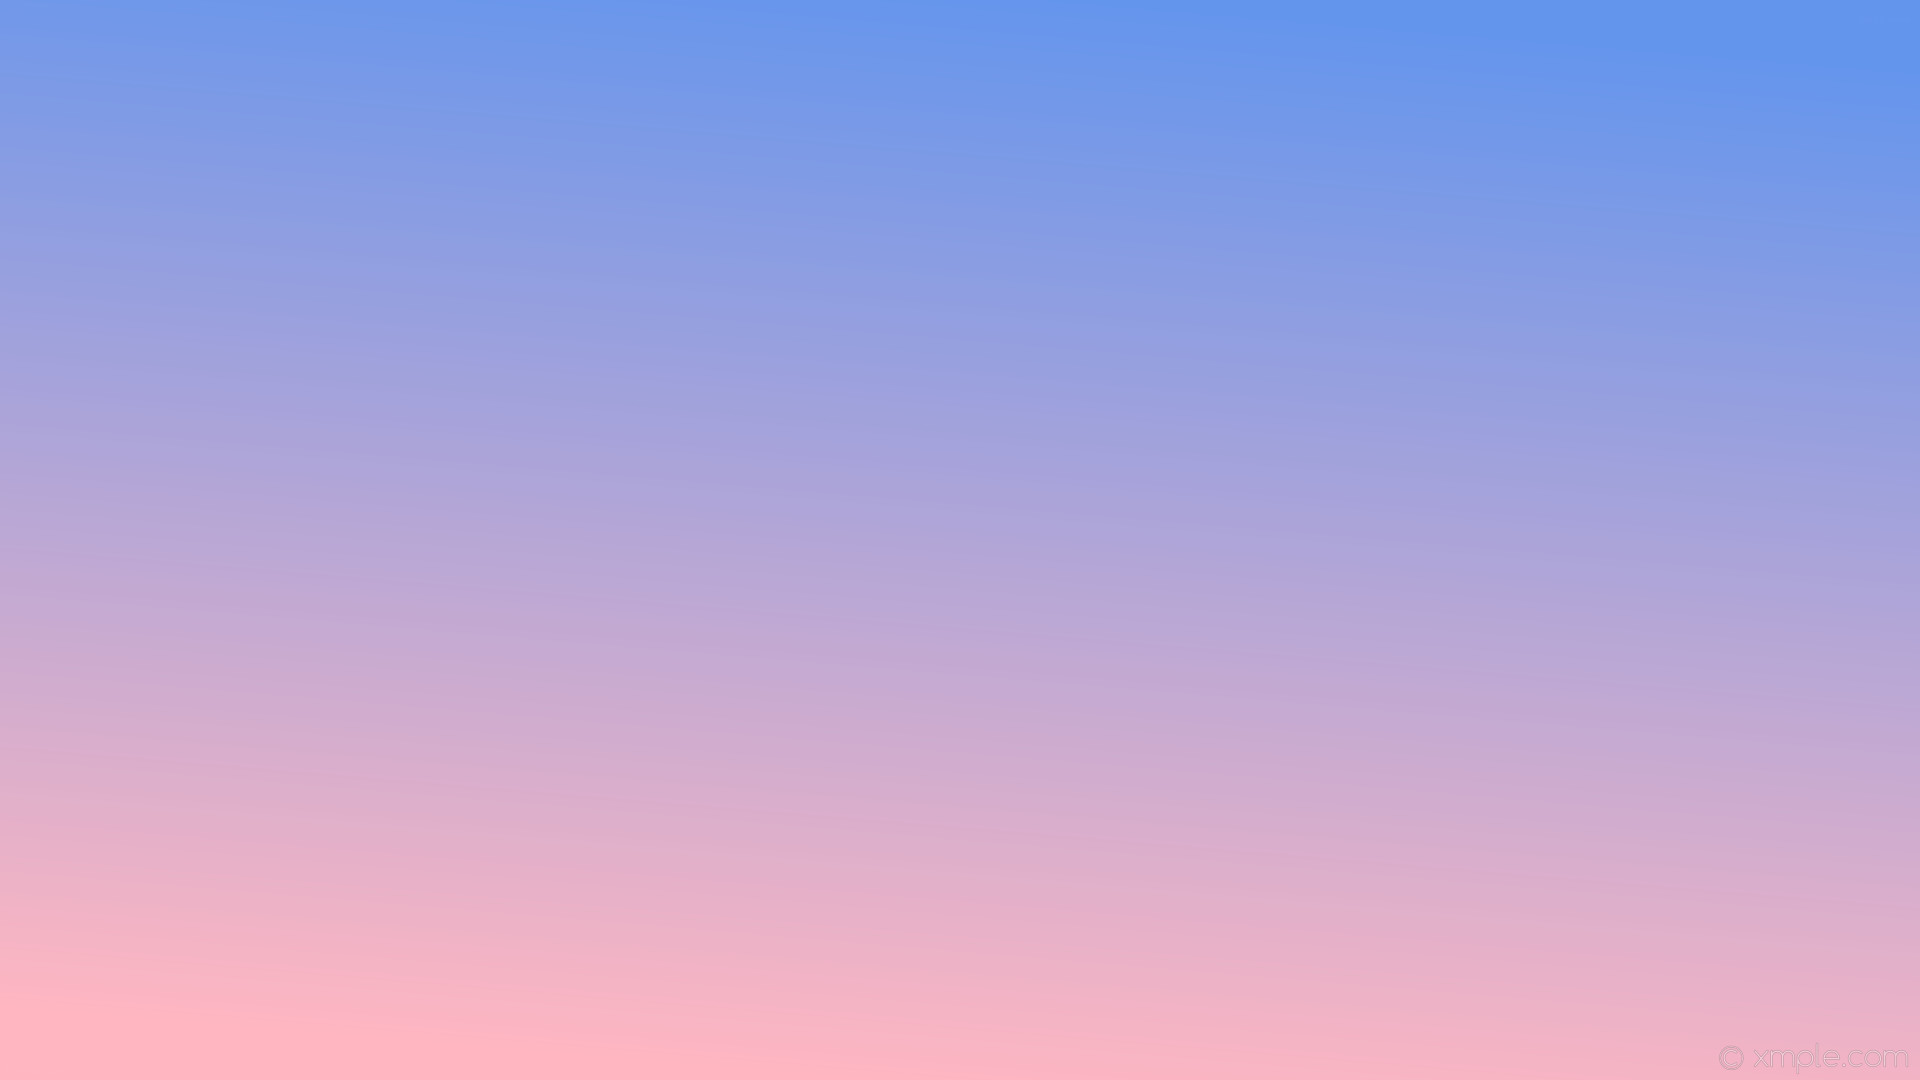 1920x1080 wallpaper blue pink gradient linear light pink cornflower blue #ffb6c1  #6495ed 255Â°